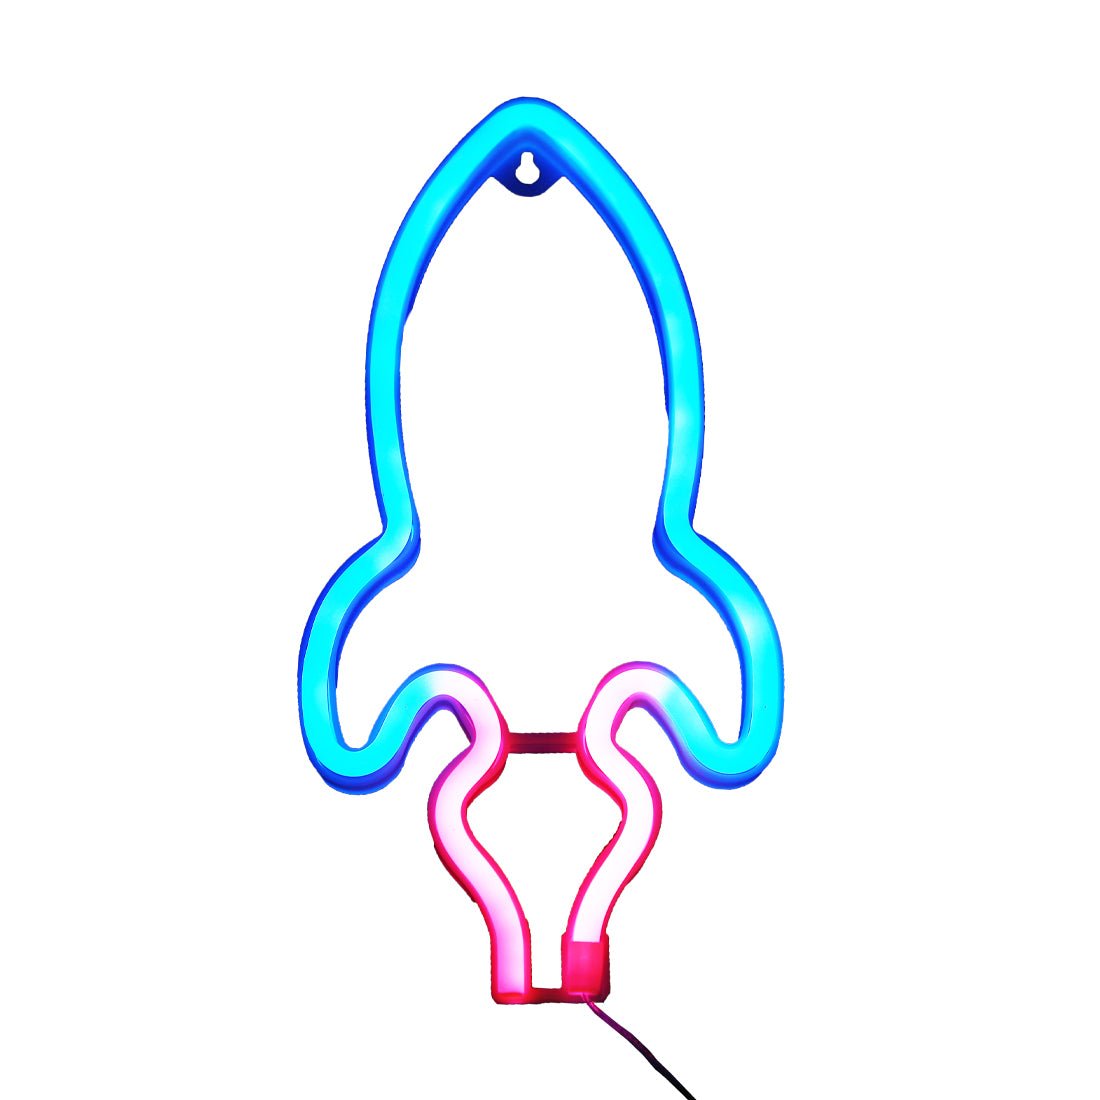 Led Neon Rocket Shape - Blue & Pink - إضاءة - Store 974 | ستور ٩٧٤